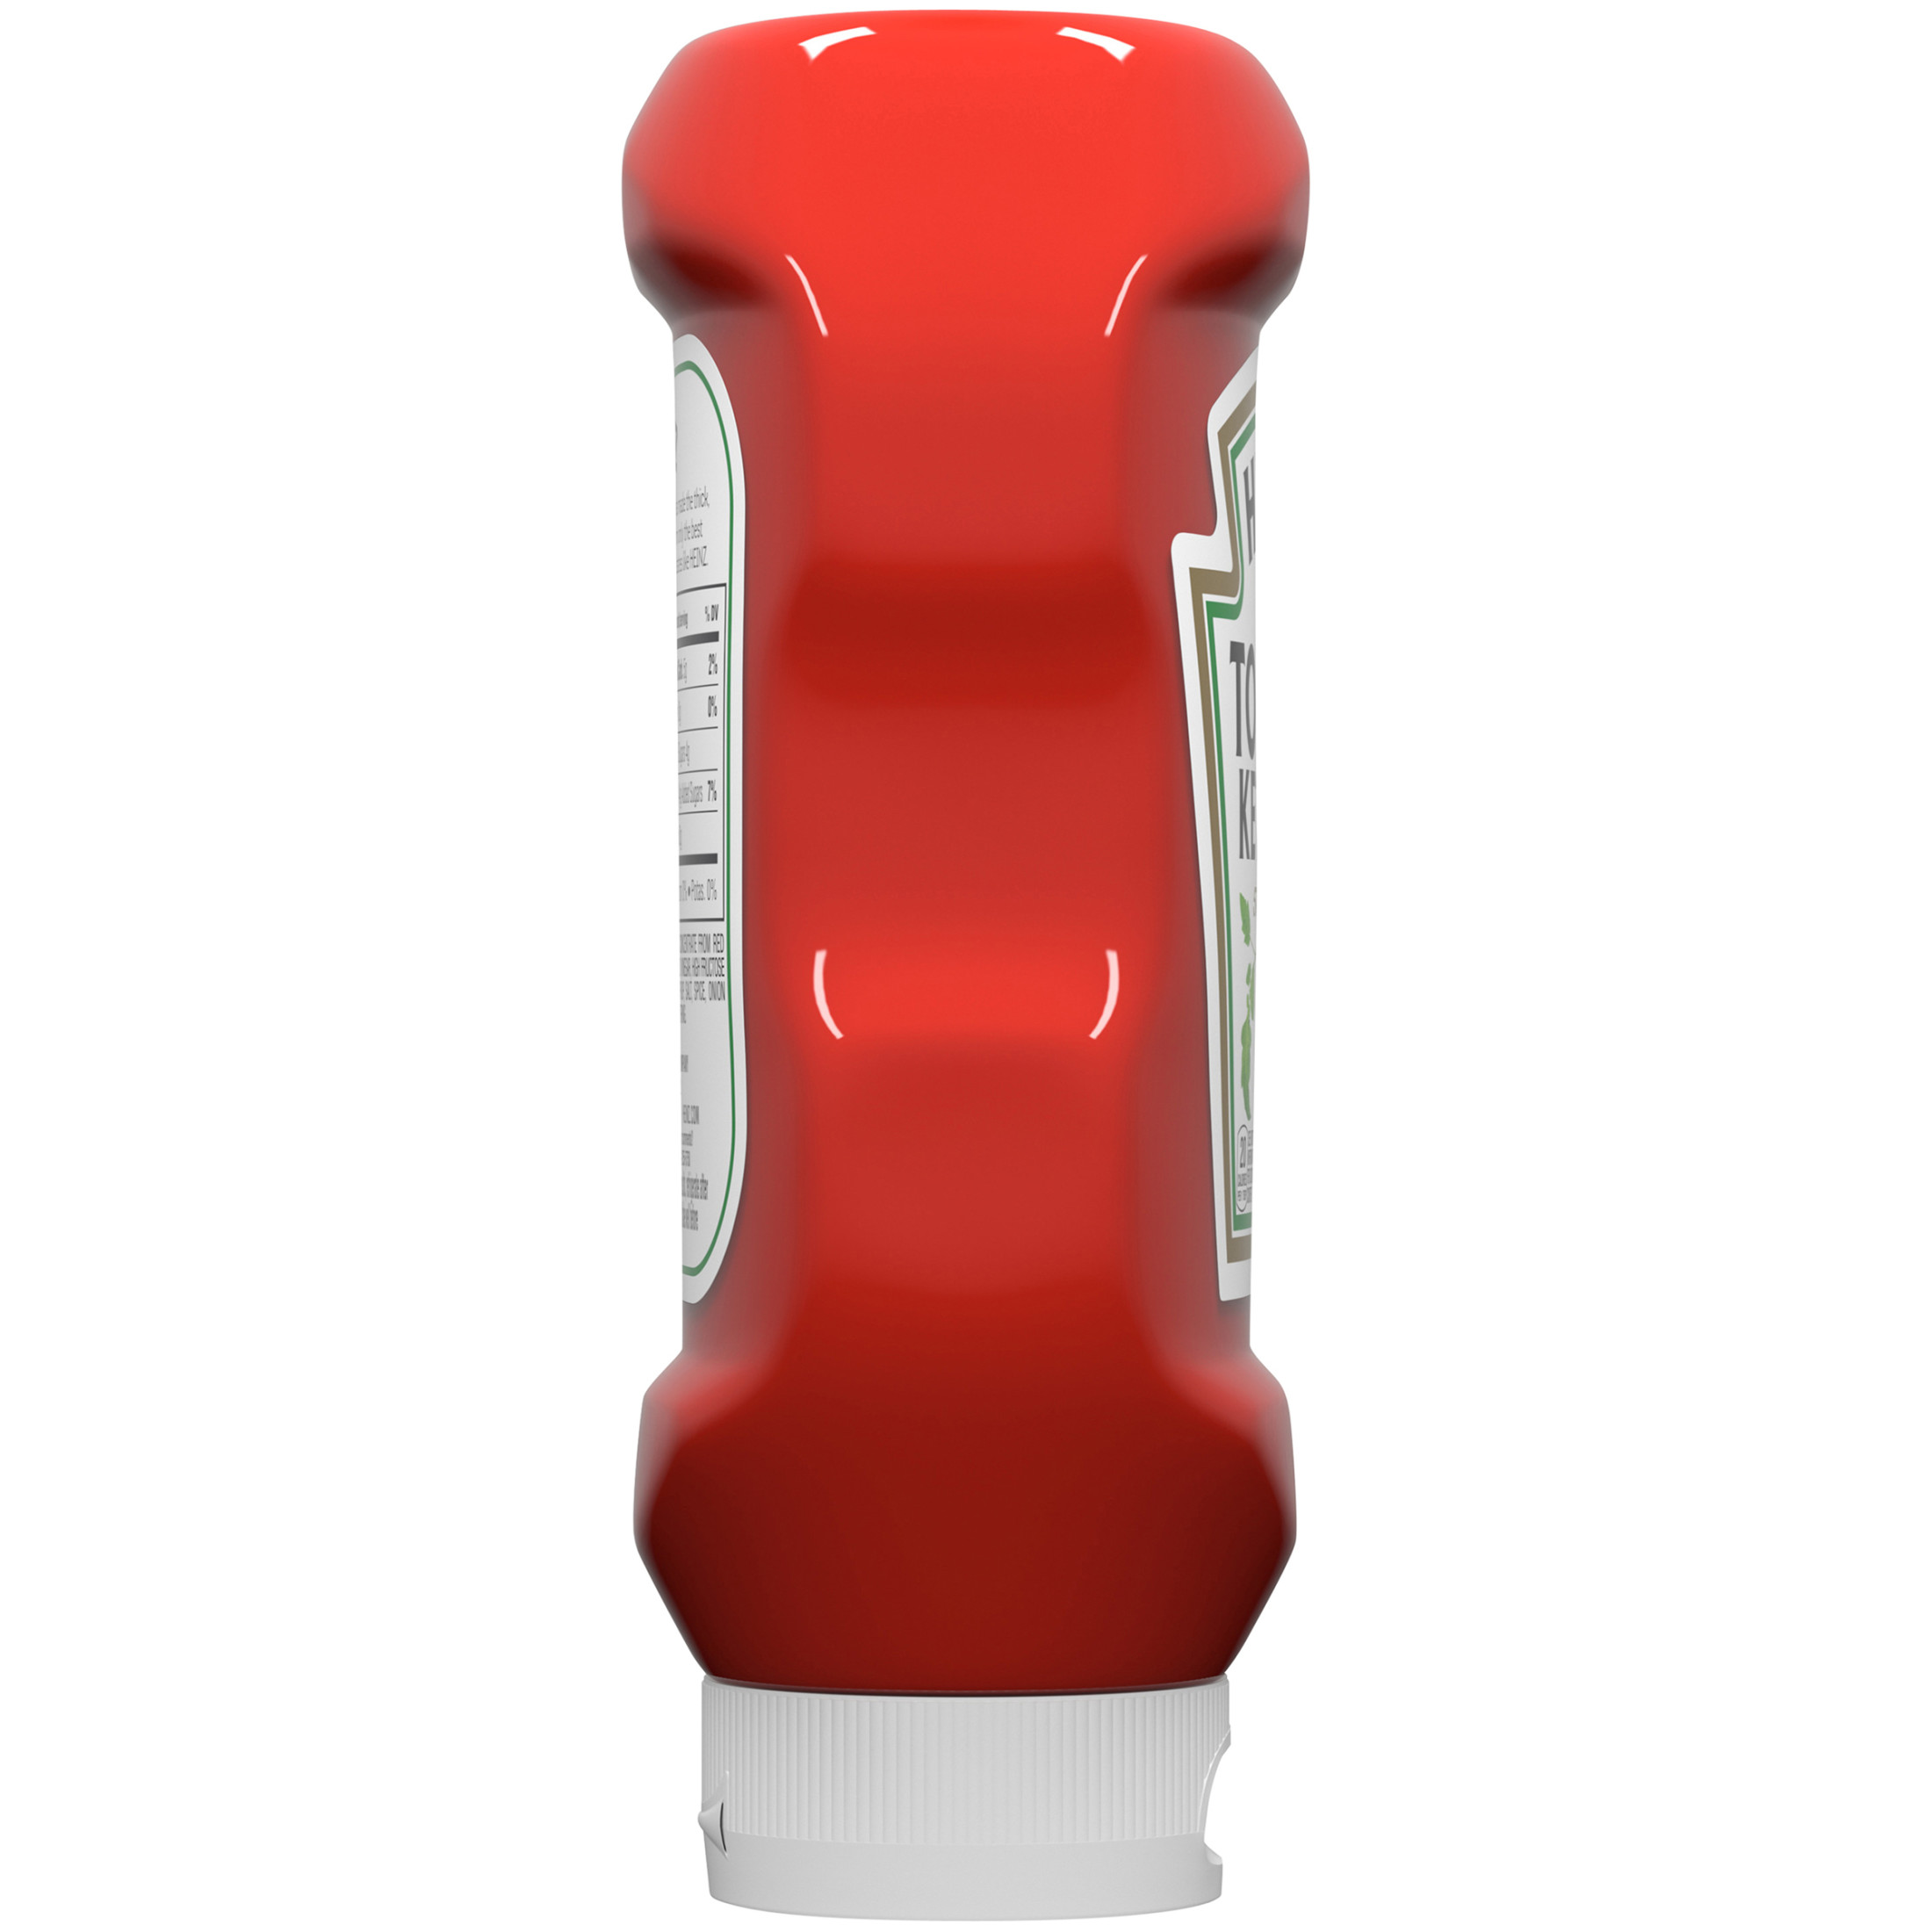 Heinz Tomato Ketchup, 32 oz Bottle - image 15 of 15